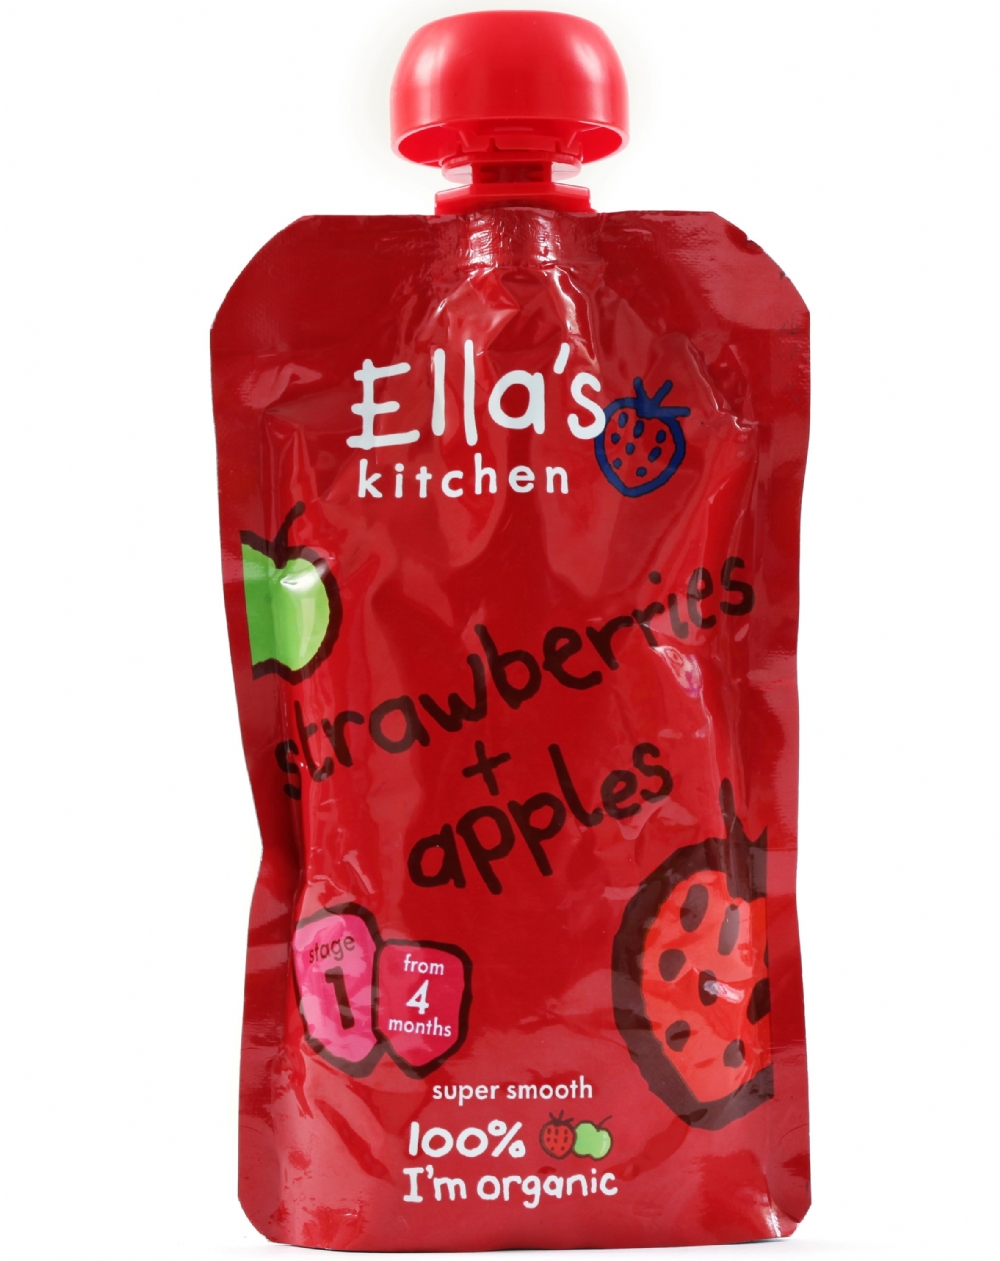 ELLA'S KITCHEN Strawberries & Apples 120g